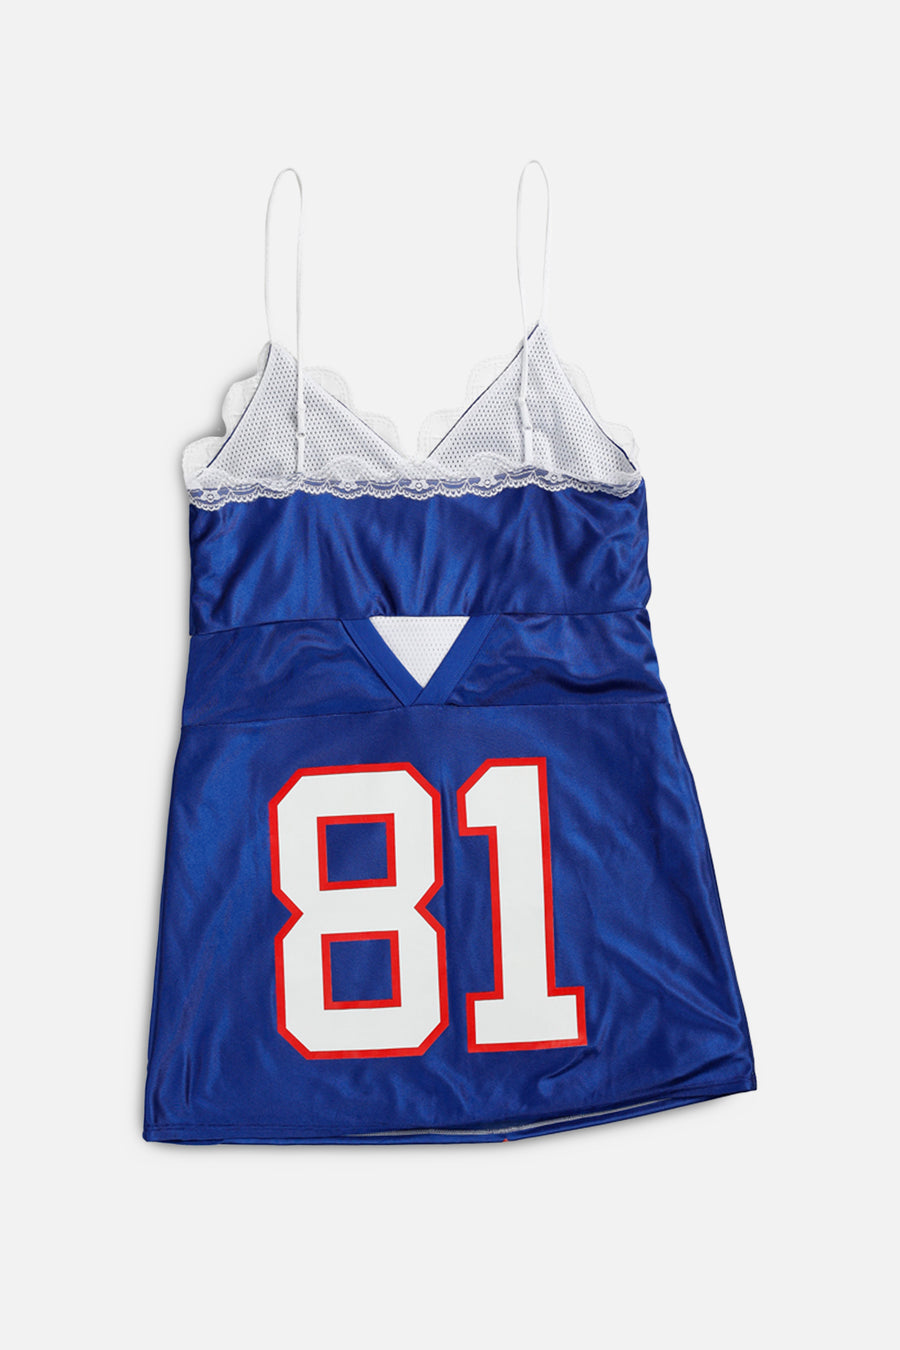 Rework NFL Lace Dress - L